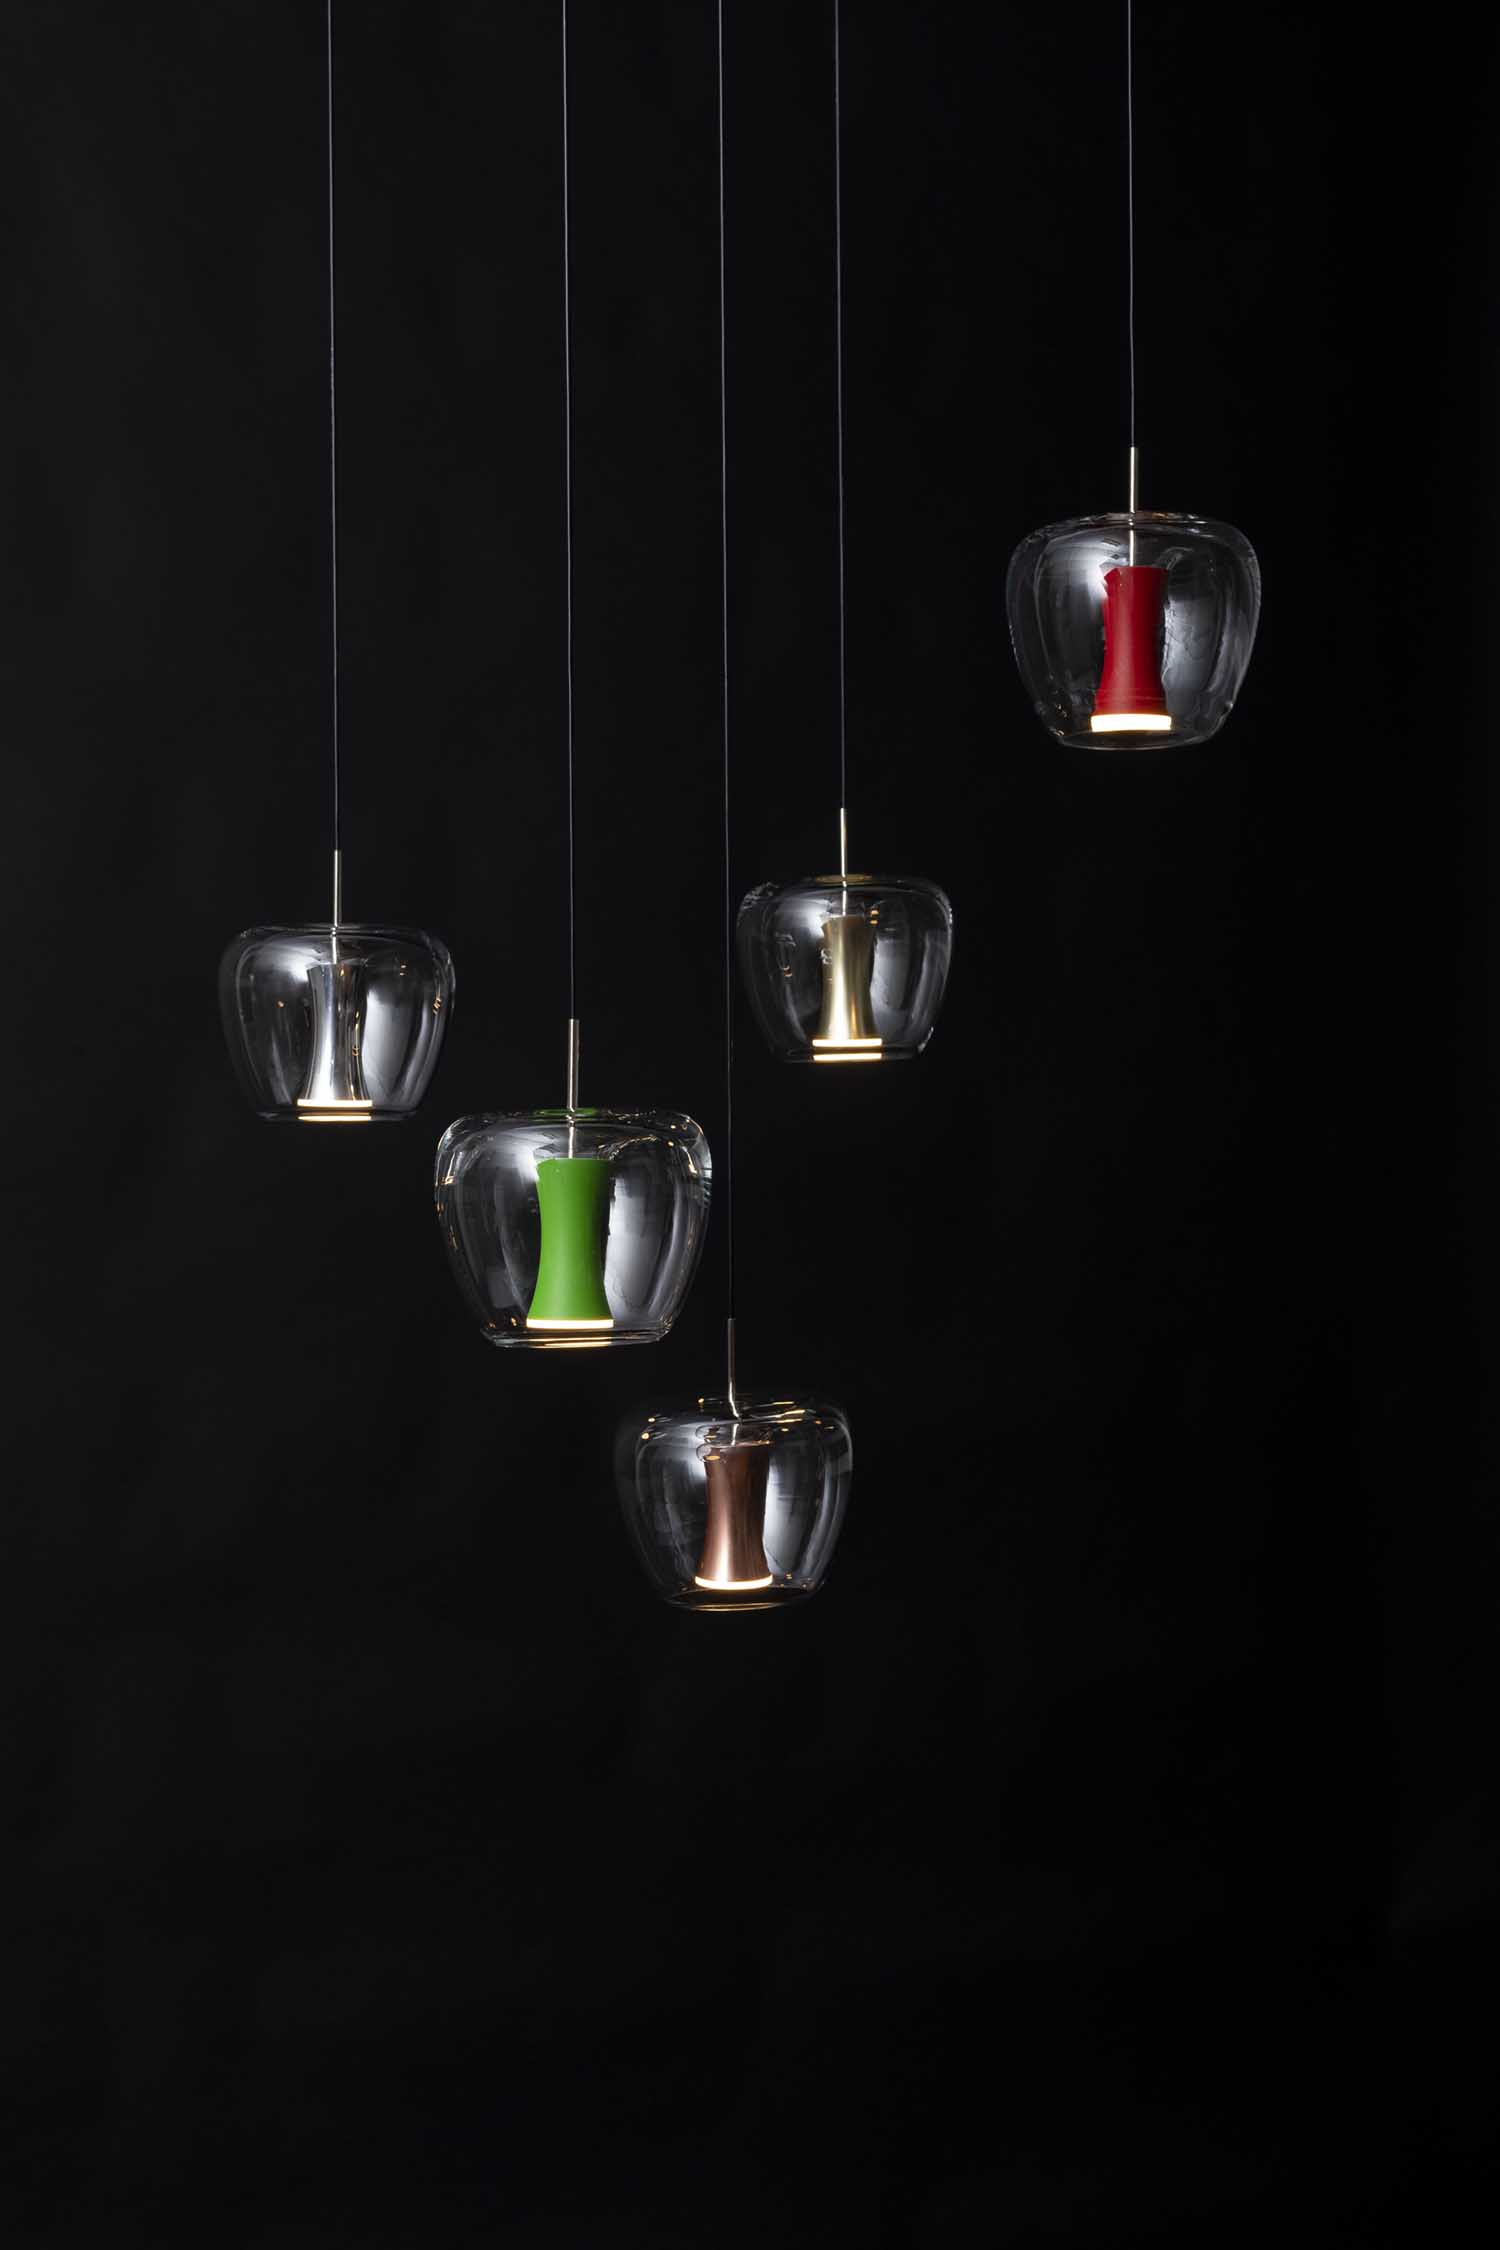 donkere foto met vijf moderne glazen lampen